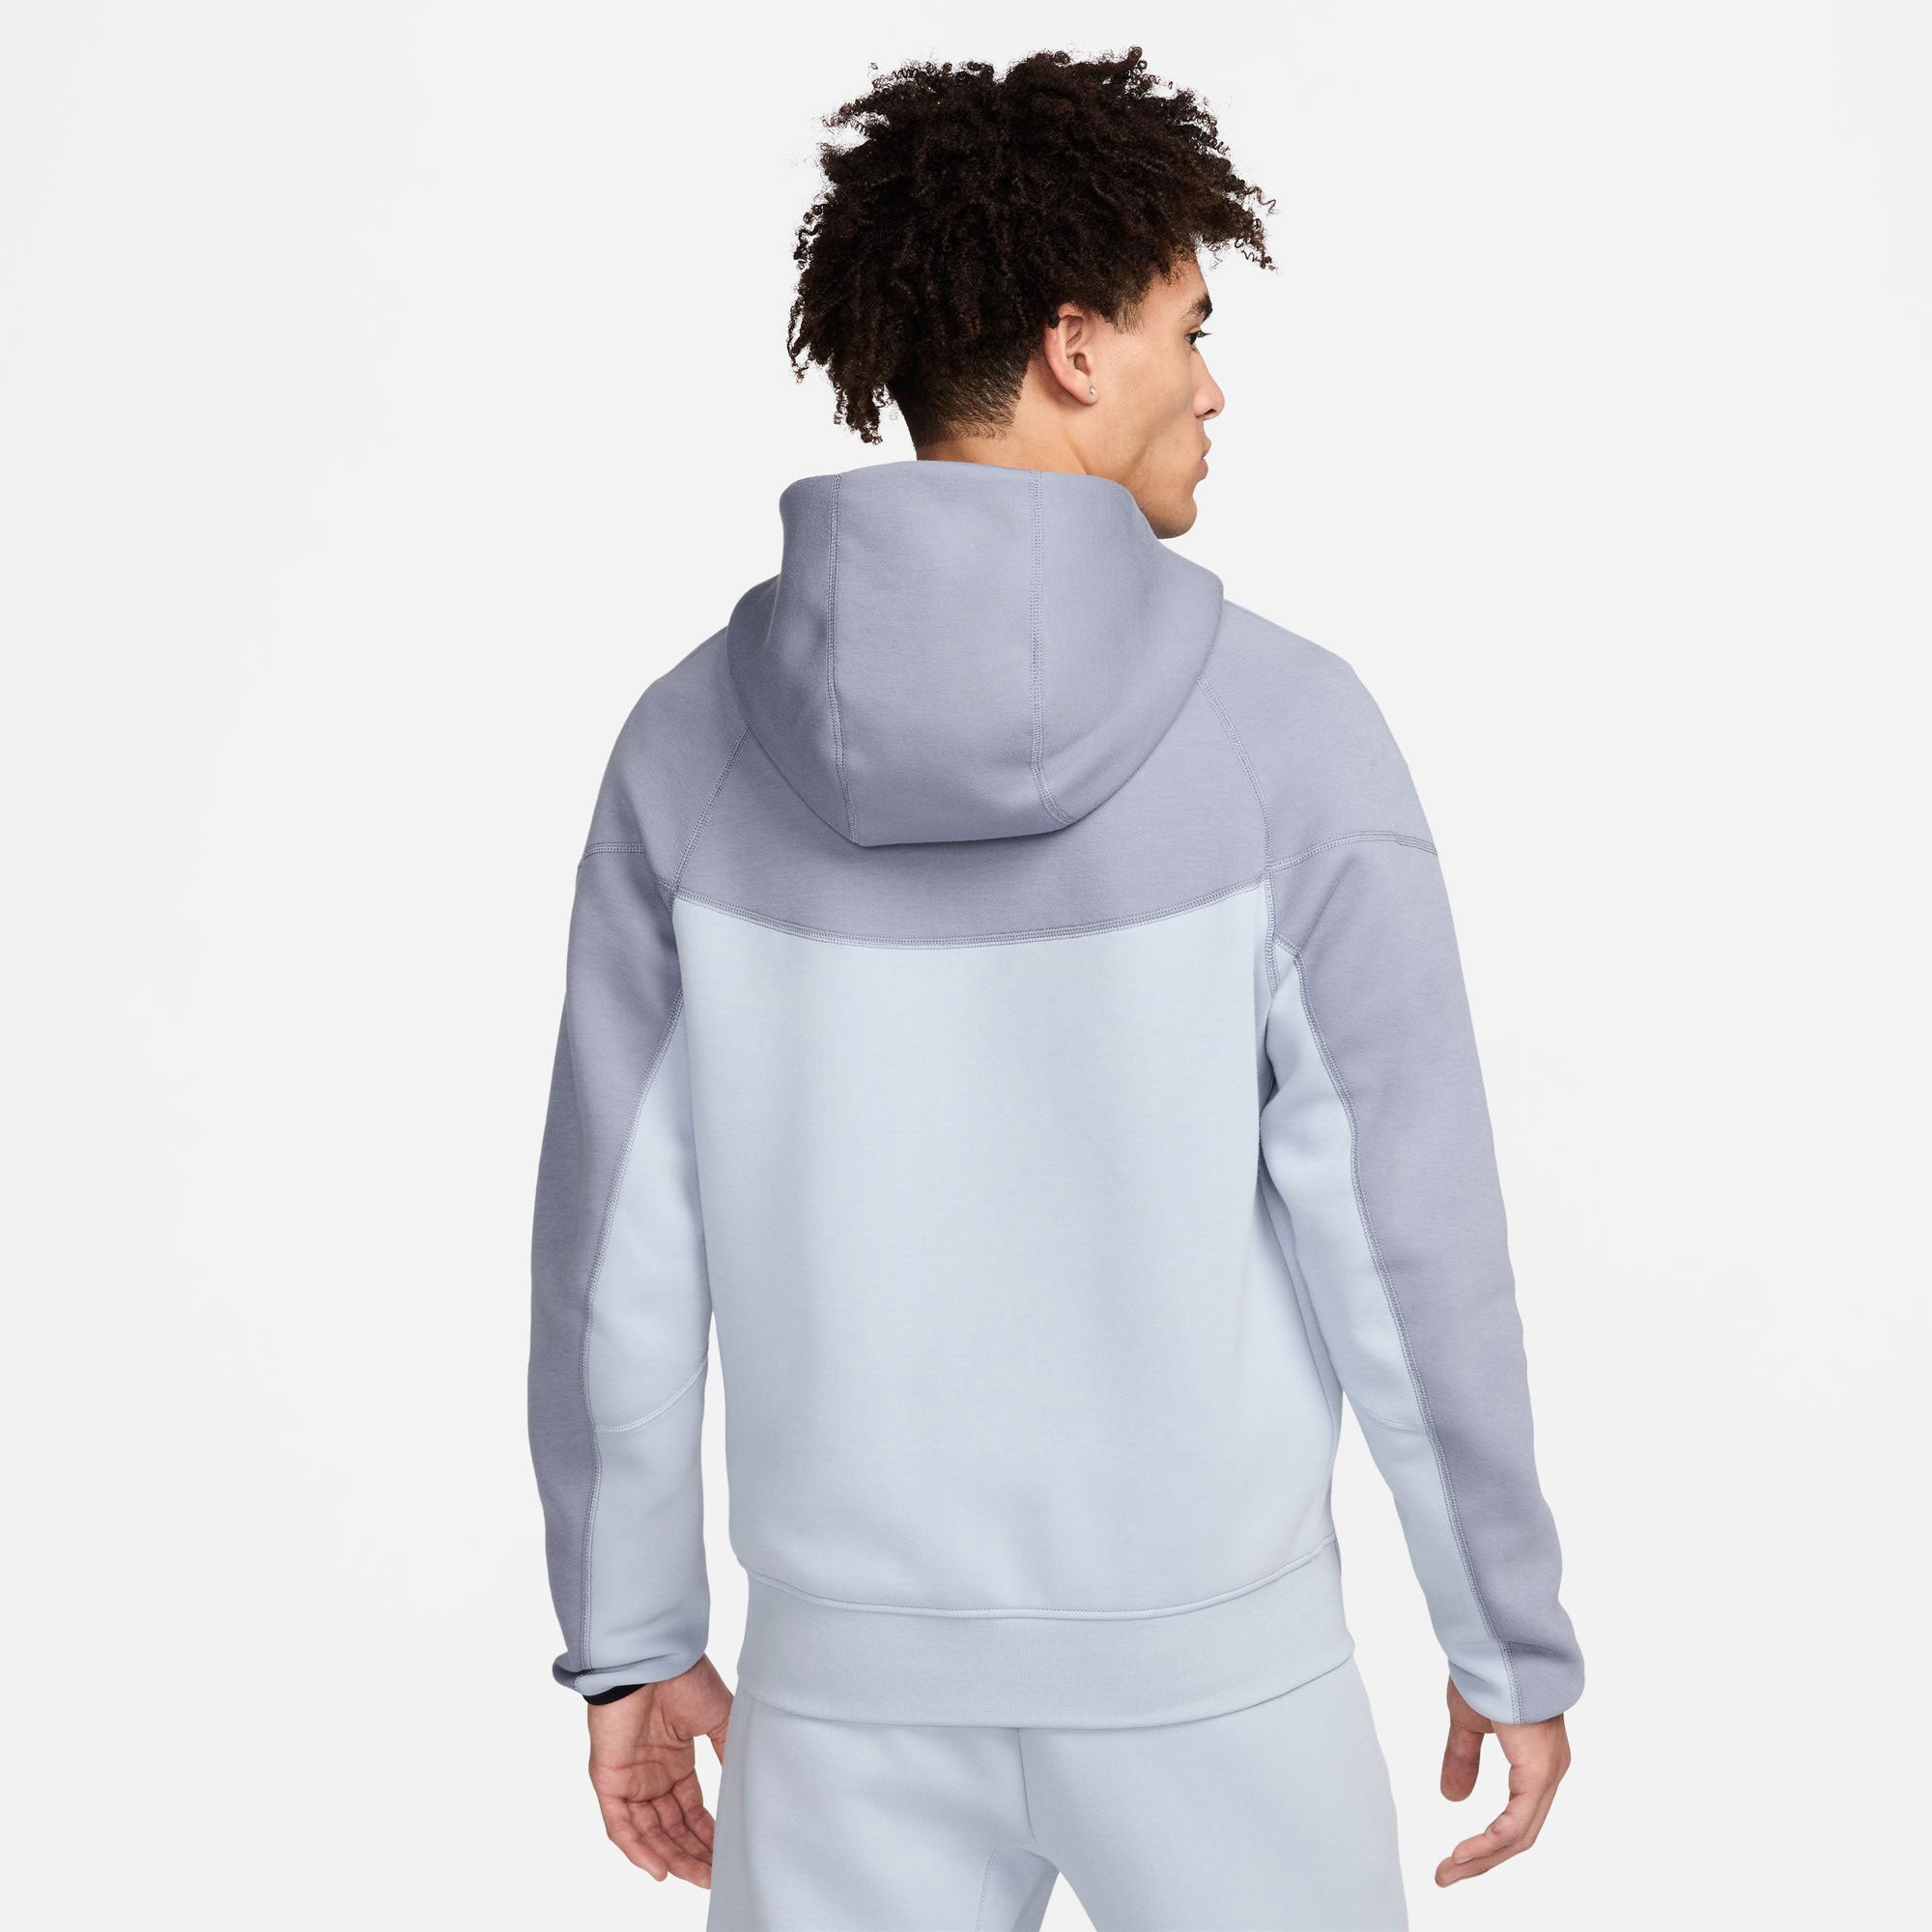 Nike Tech Fleece Men's Full-Zip Hoodie - Blue (2)